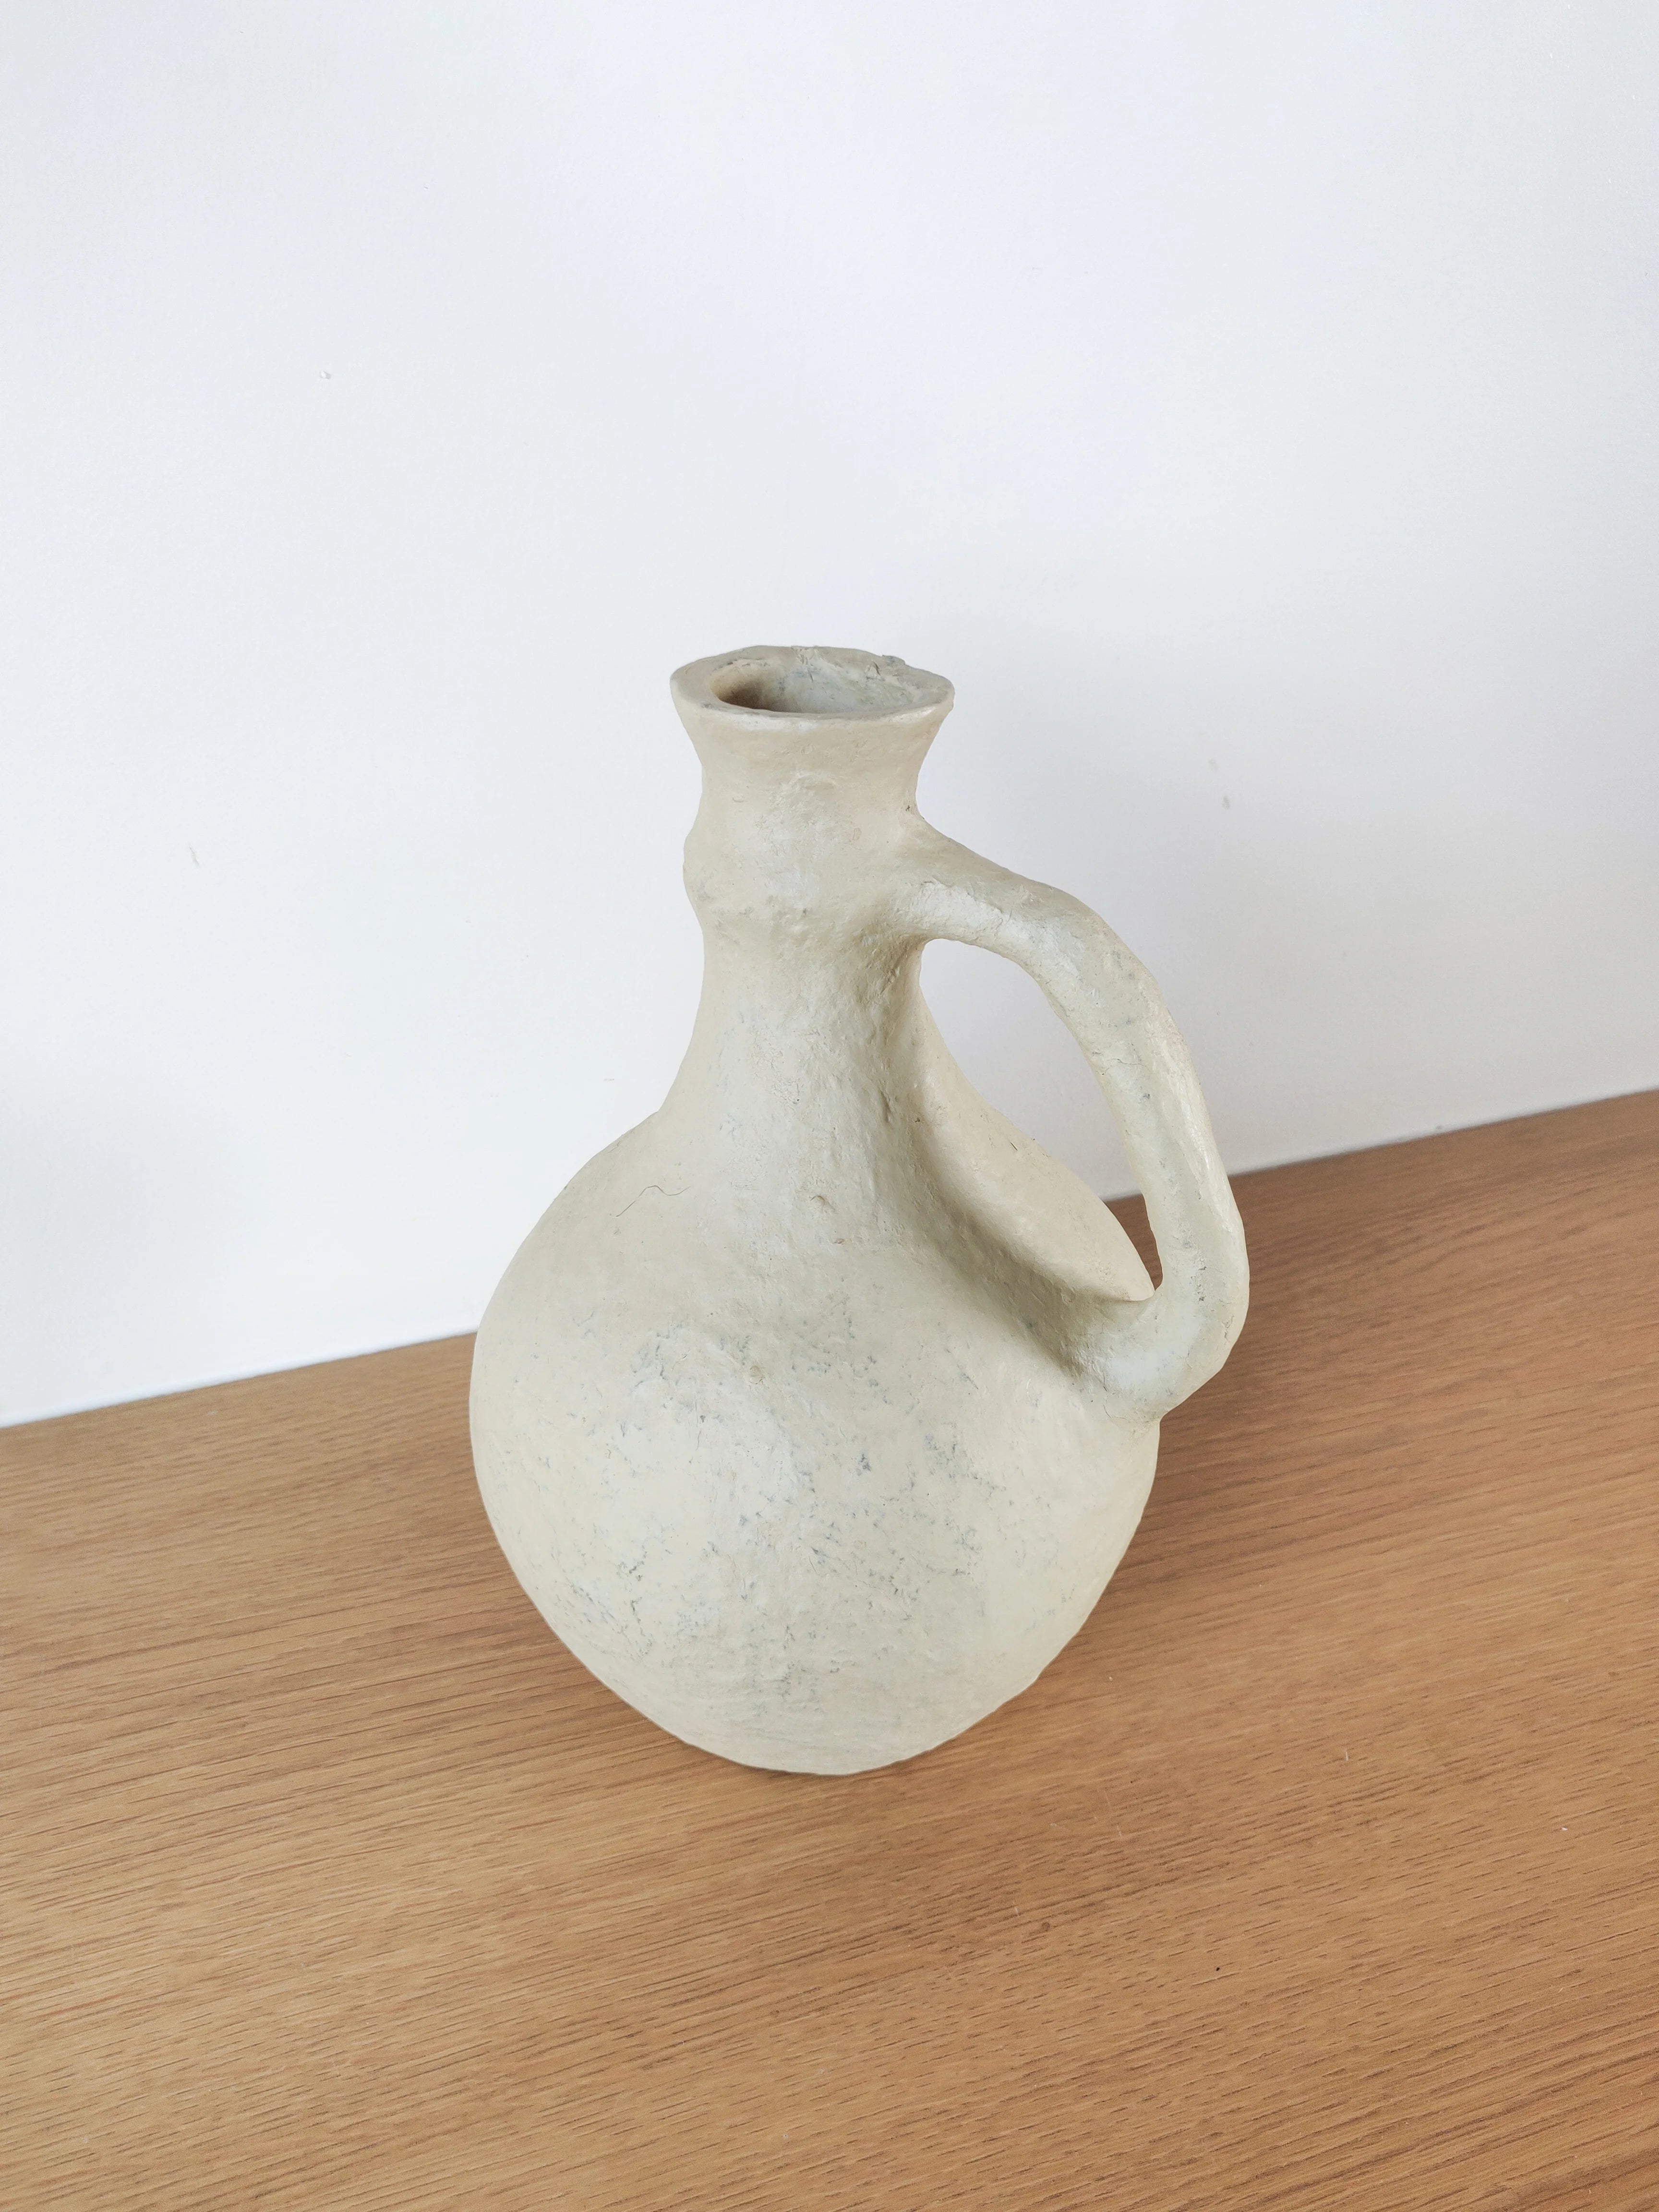 Paper Mache Single Handed Vase